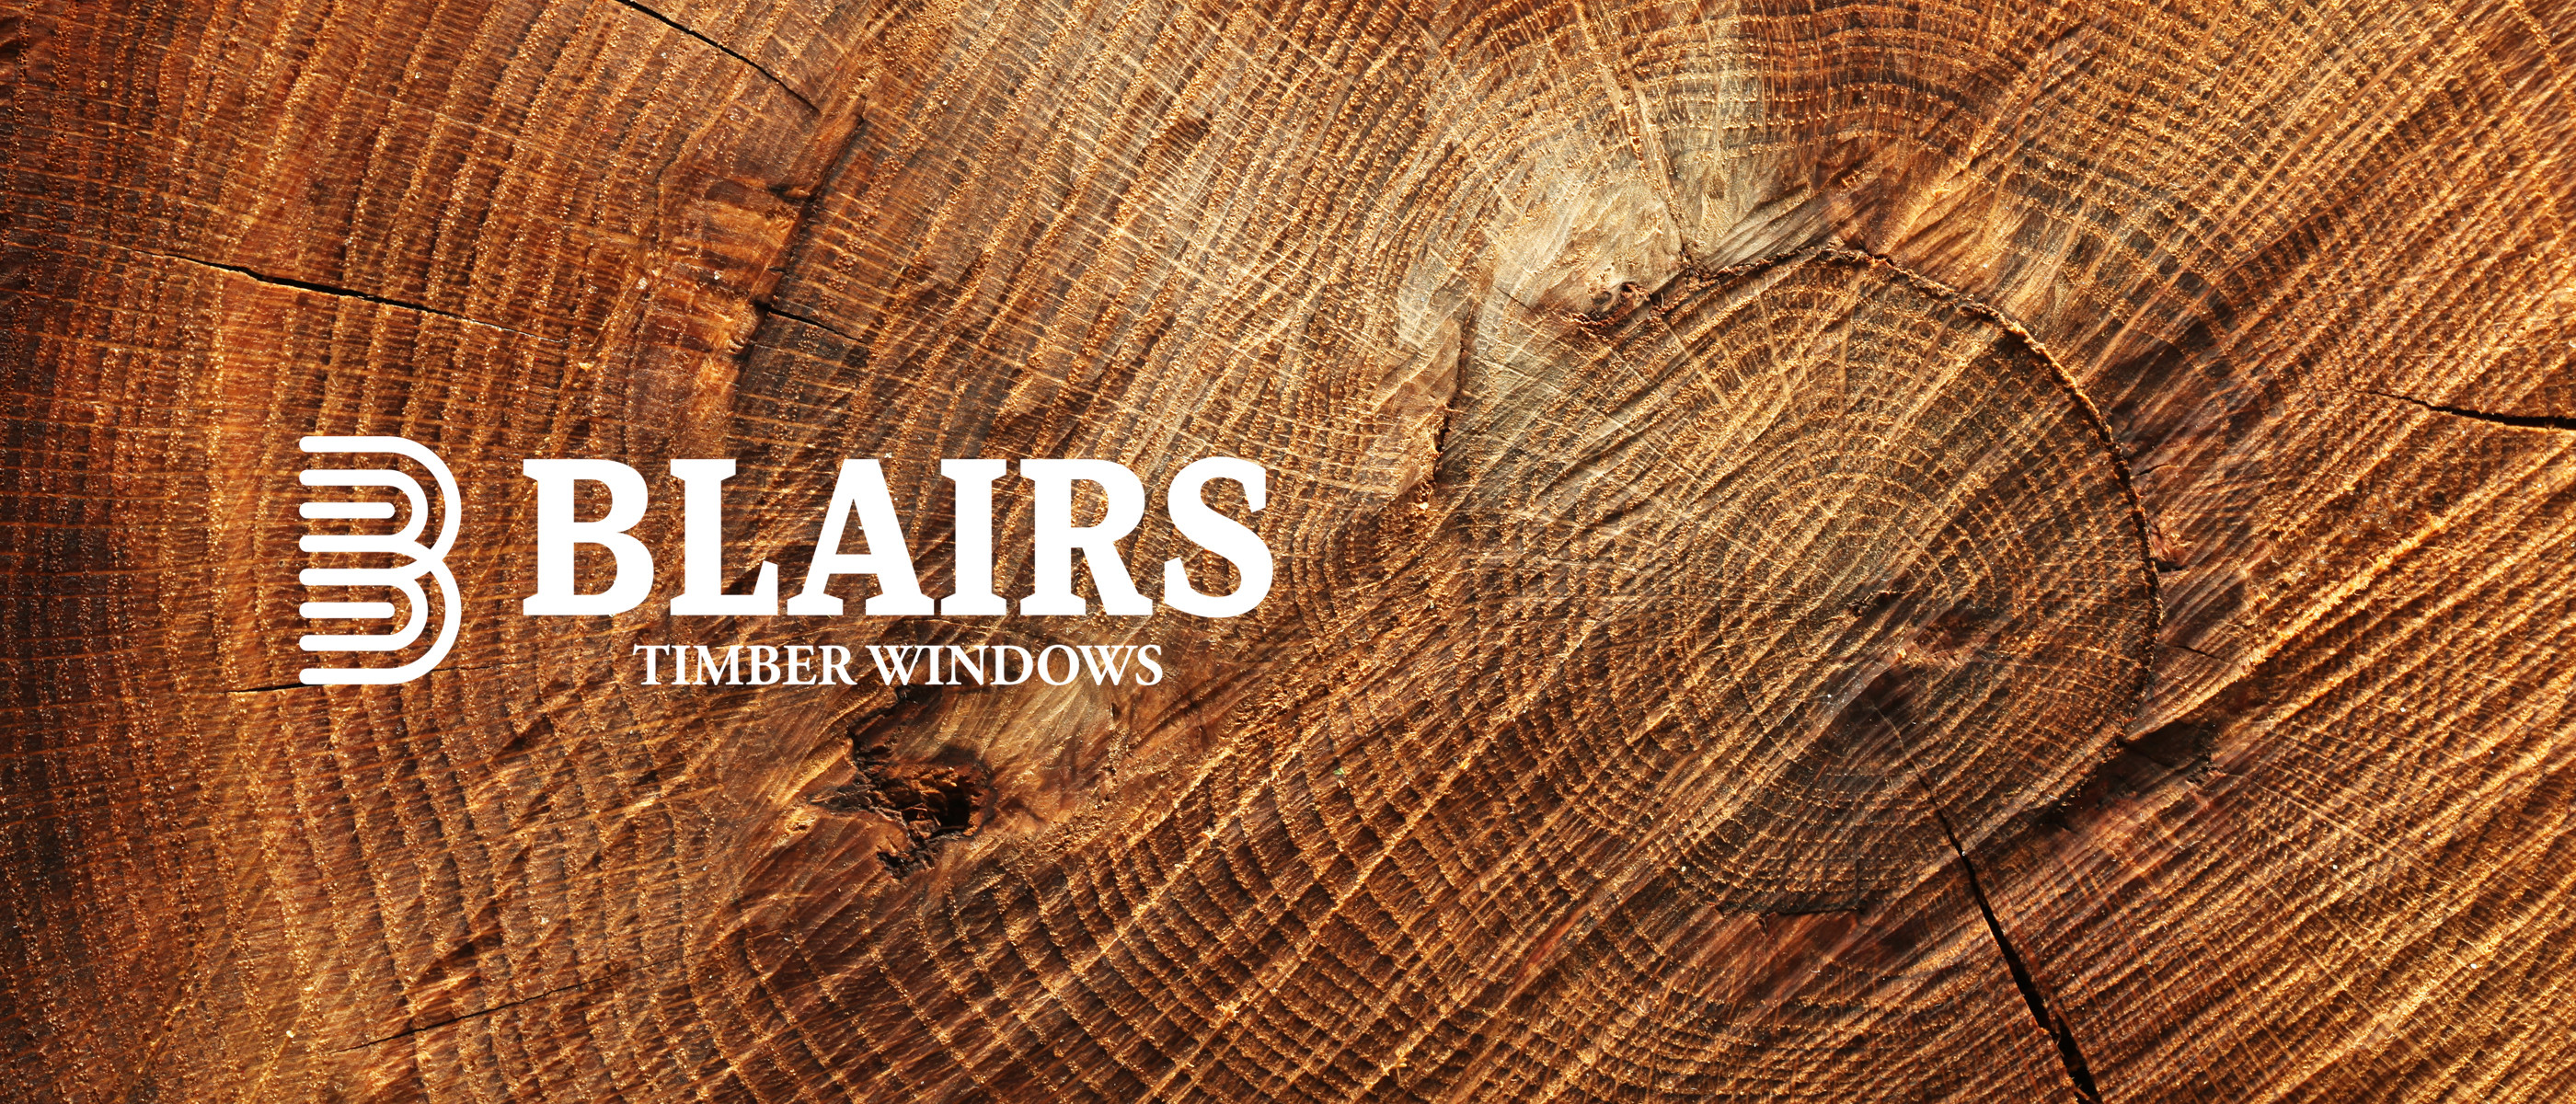 Blairs Timber Windows